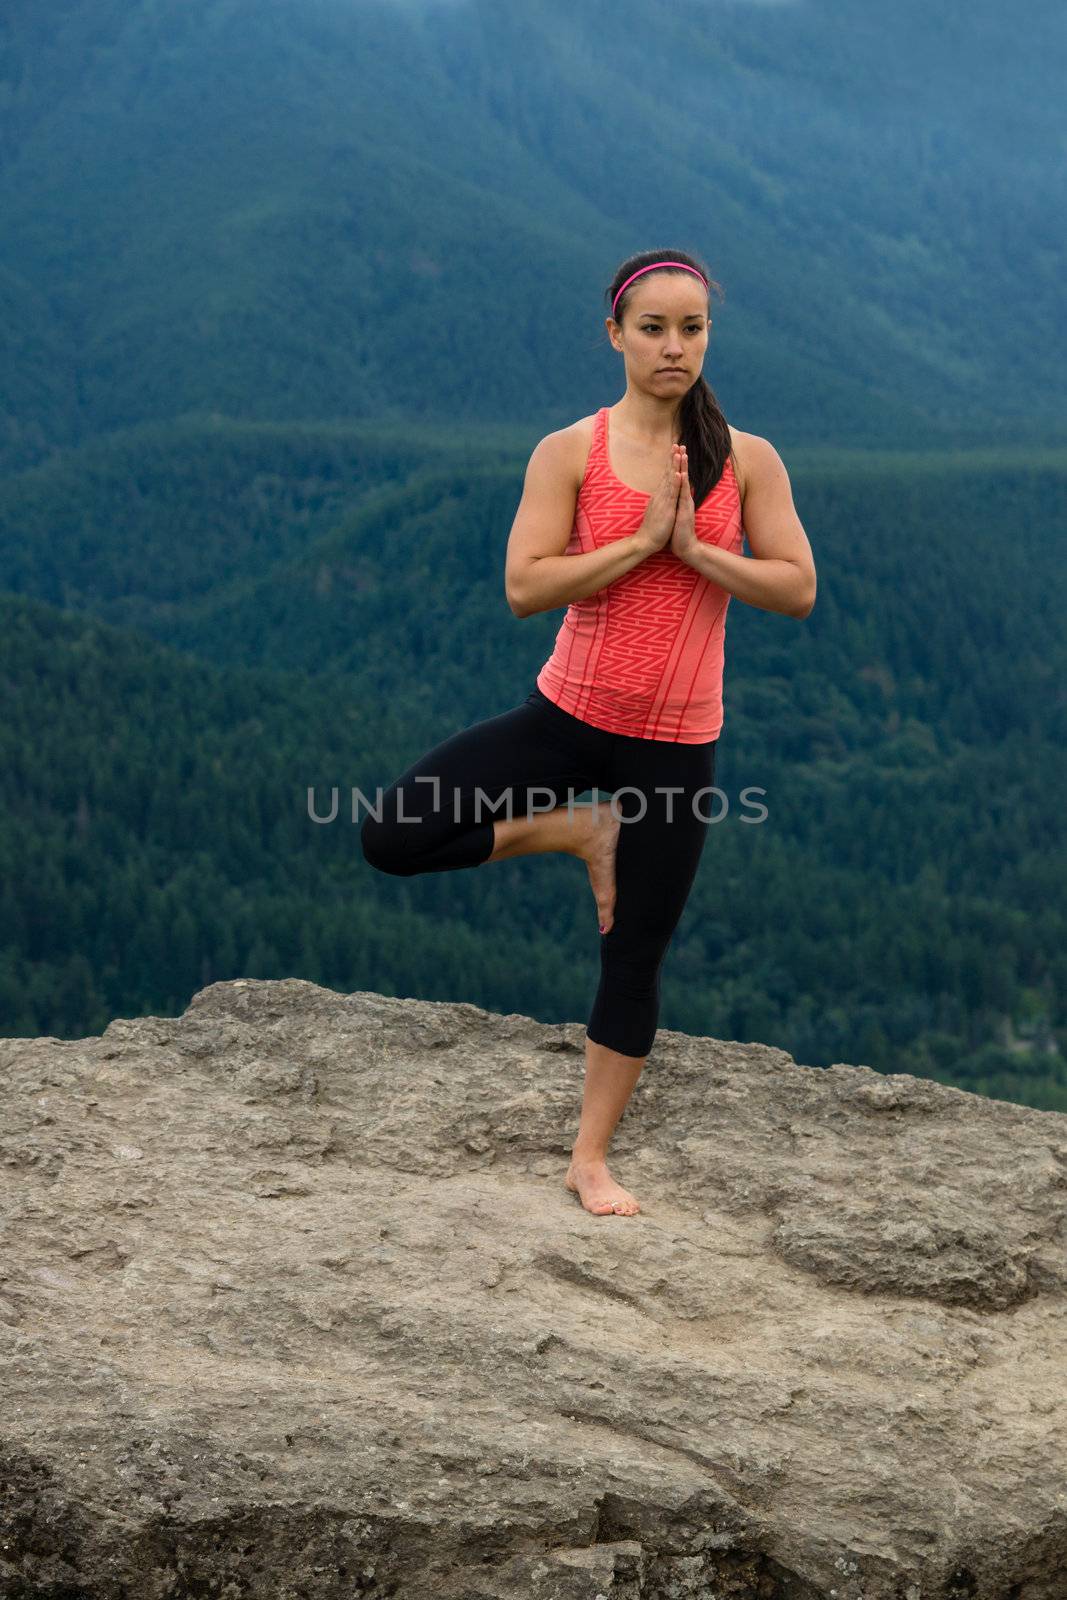 Mountain Yoga - Women Pose 10 by sketchyT